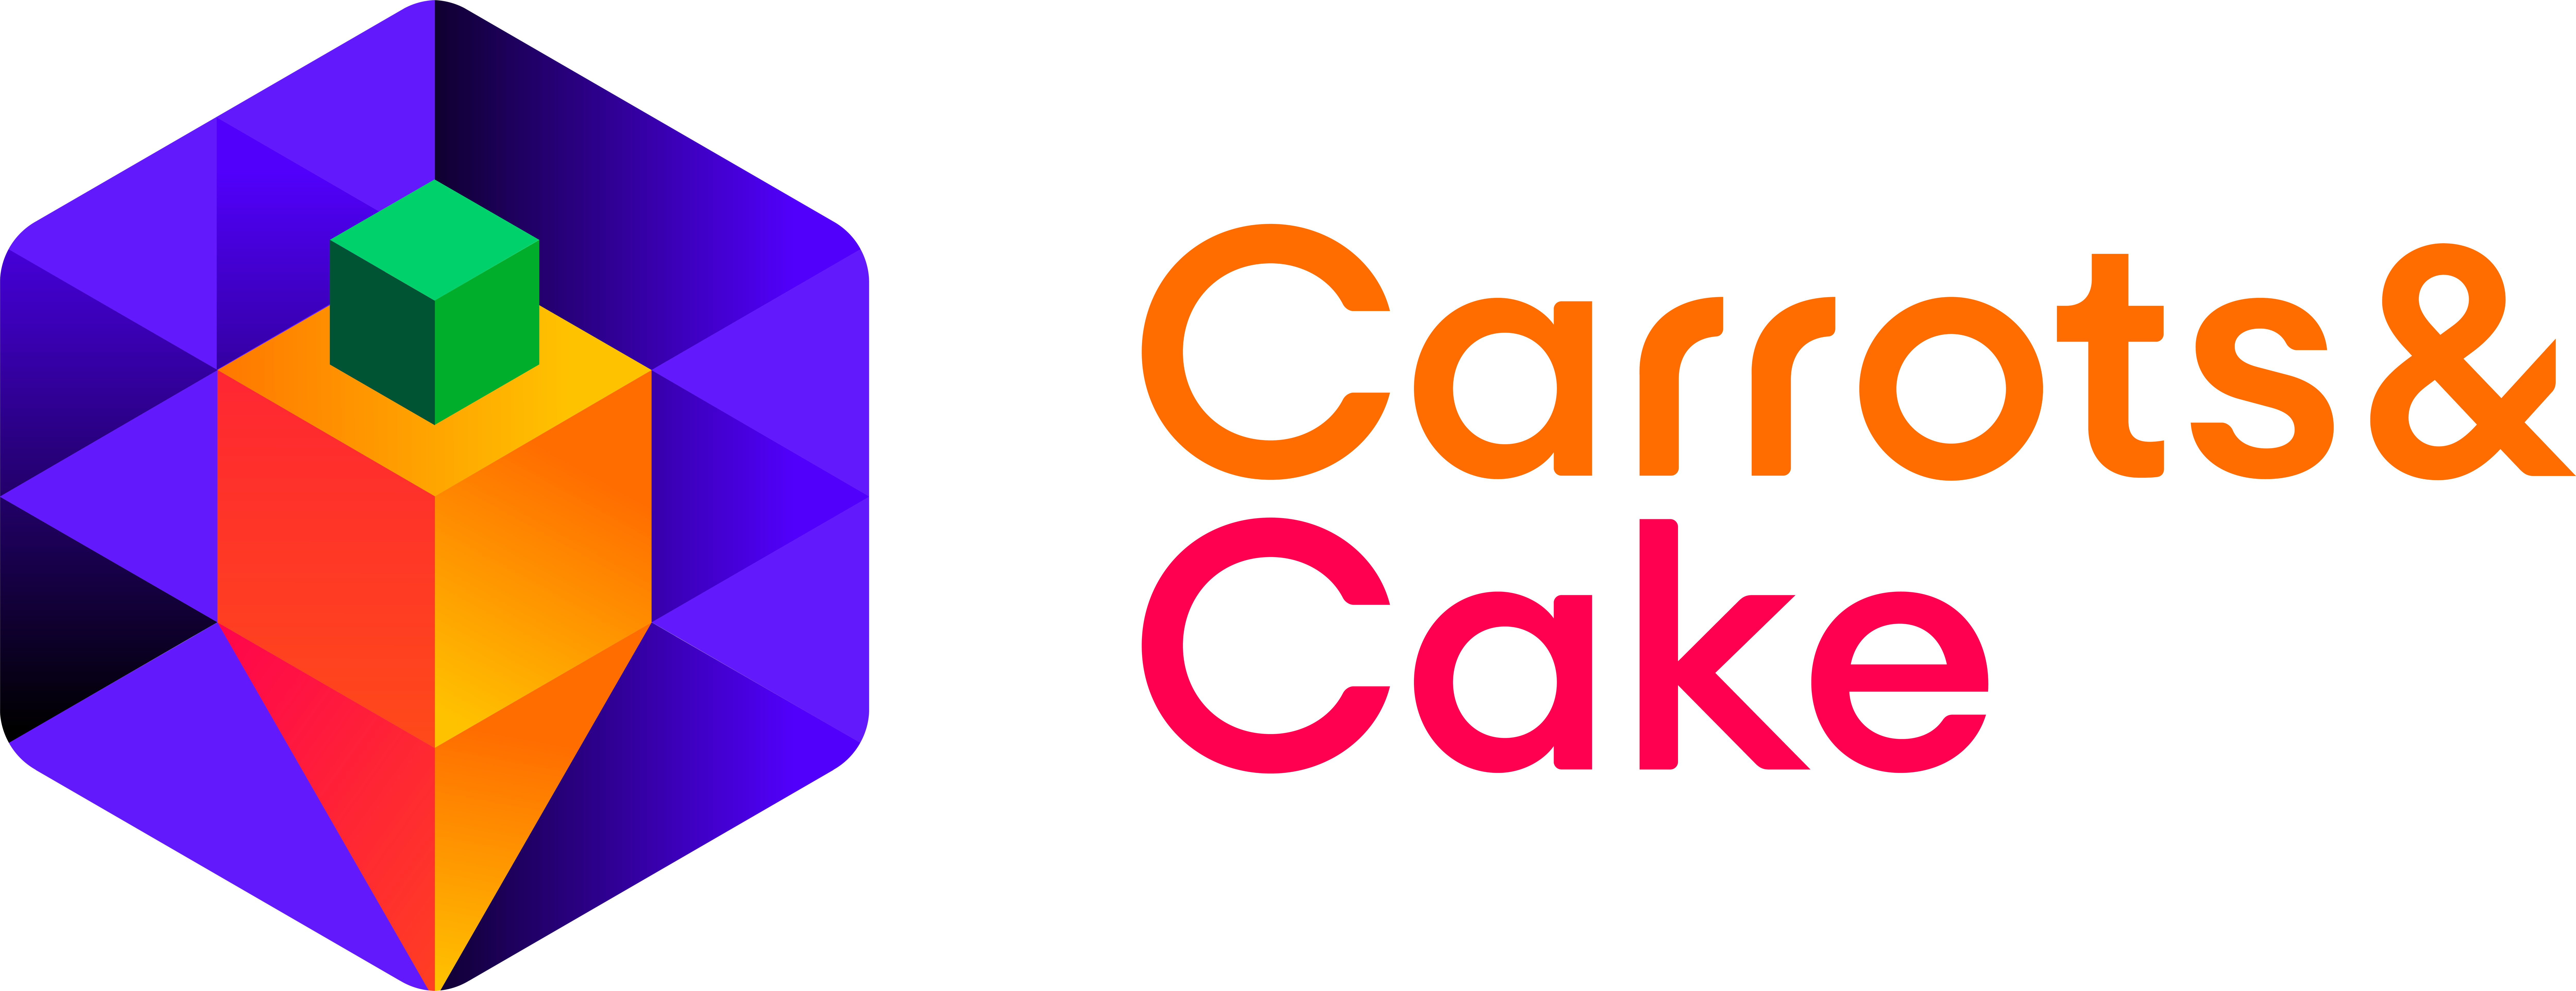 Carrots&Cake